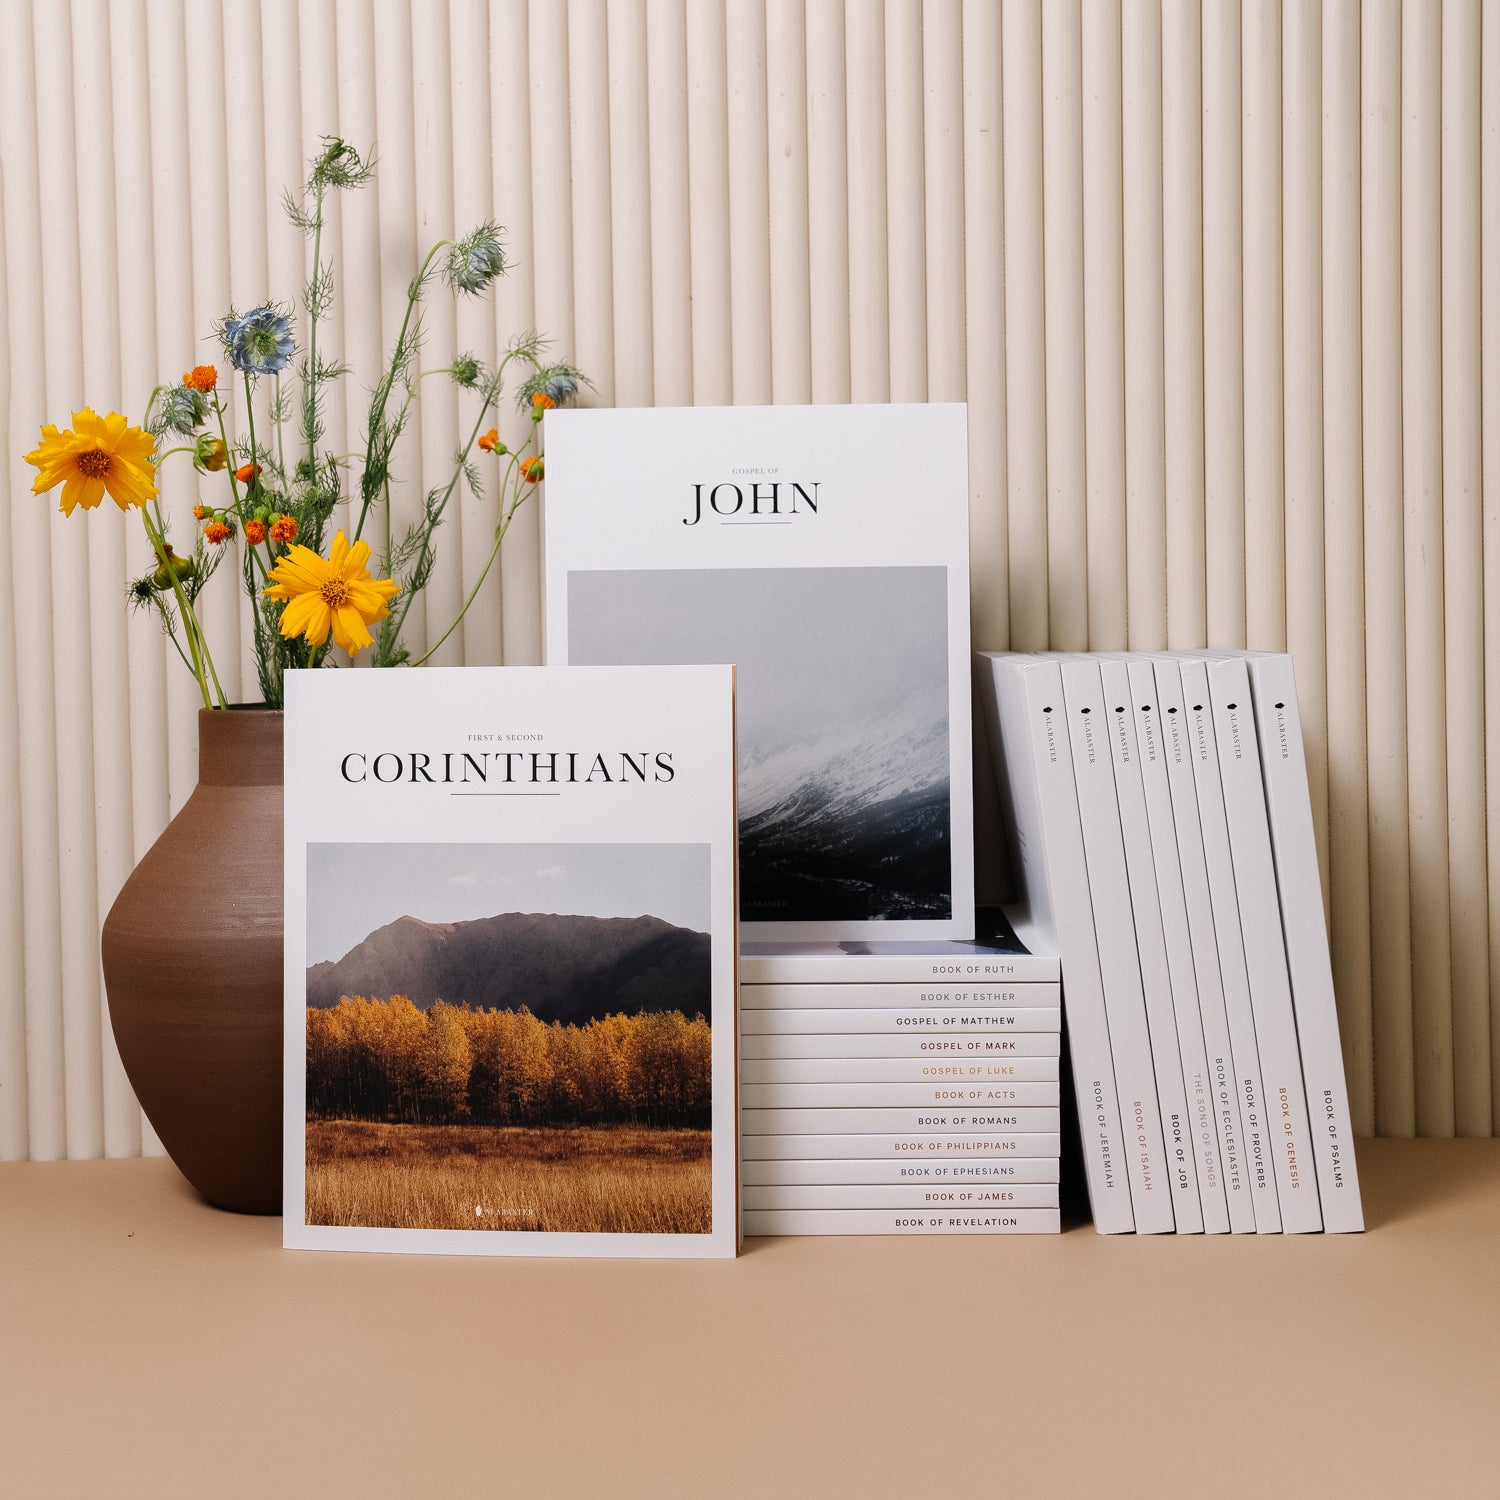 Alabaster books, including Corinthians and John